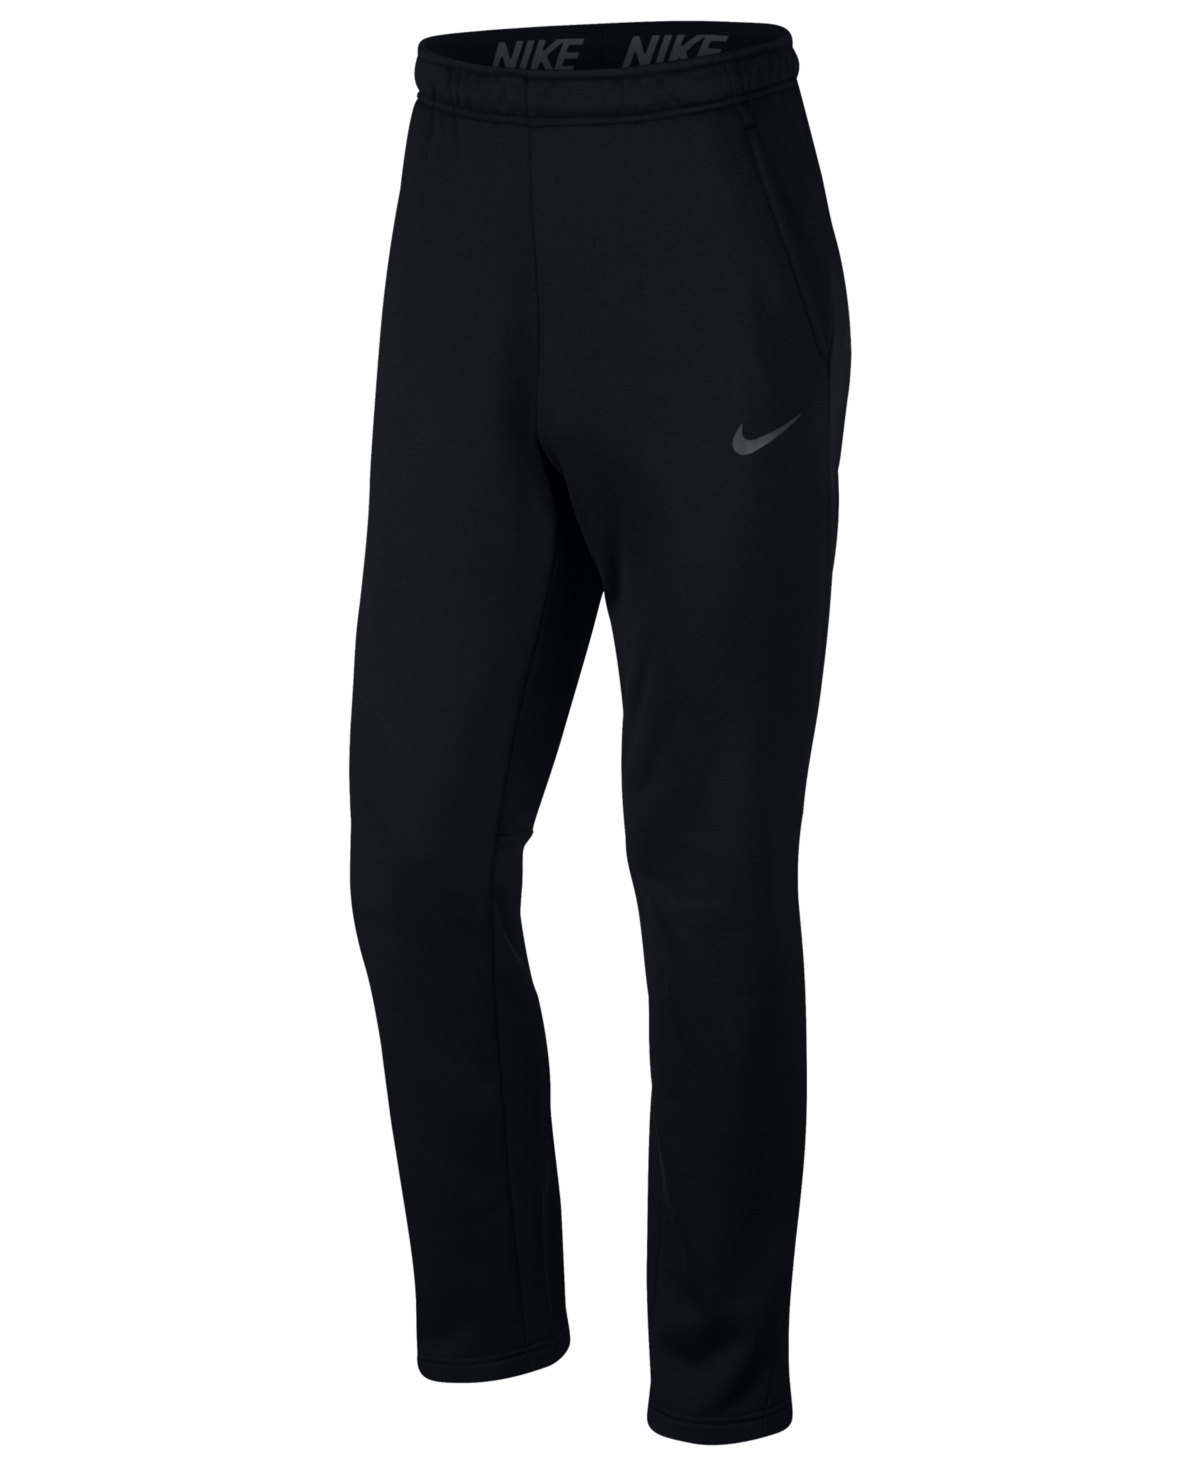 UPC 886668211565 product image for Nike Men's Therma Open Bottom Training Pants | upcitemdb.com